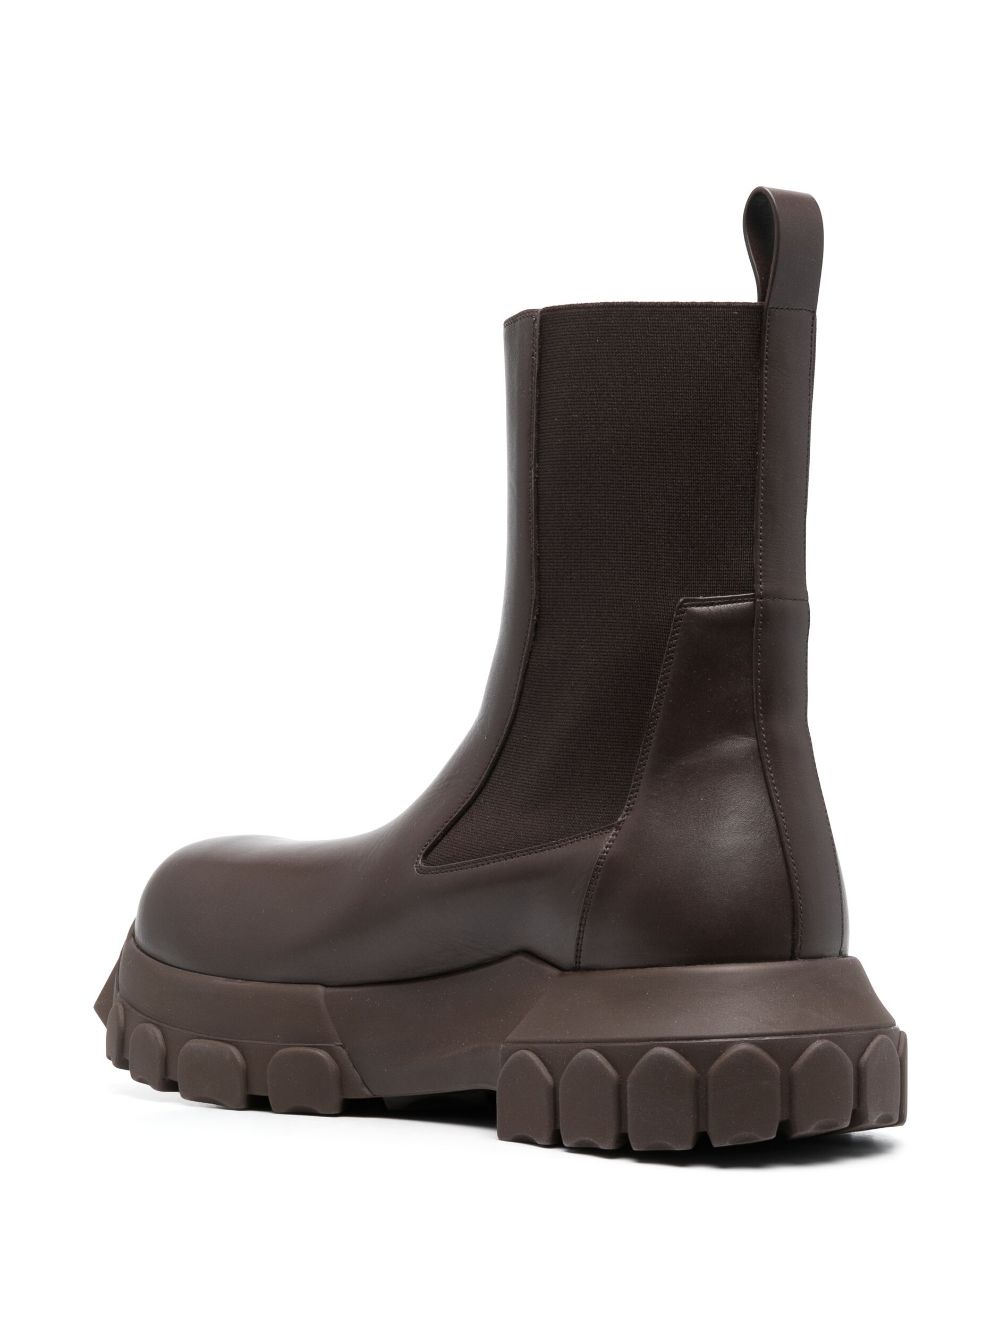 Edfu leather track boots - 3